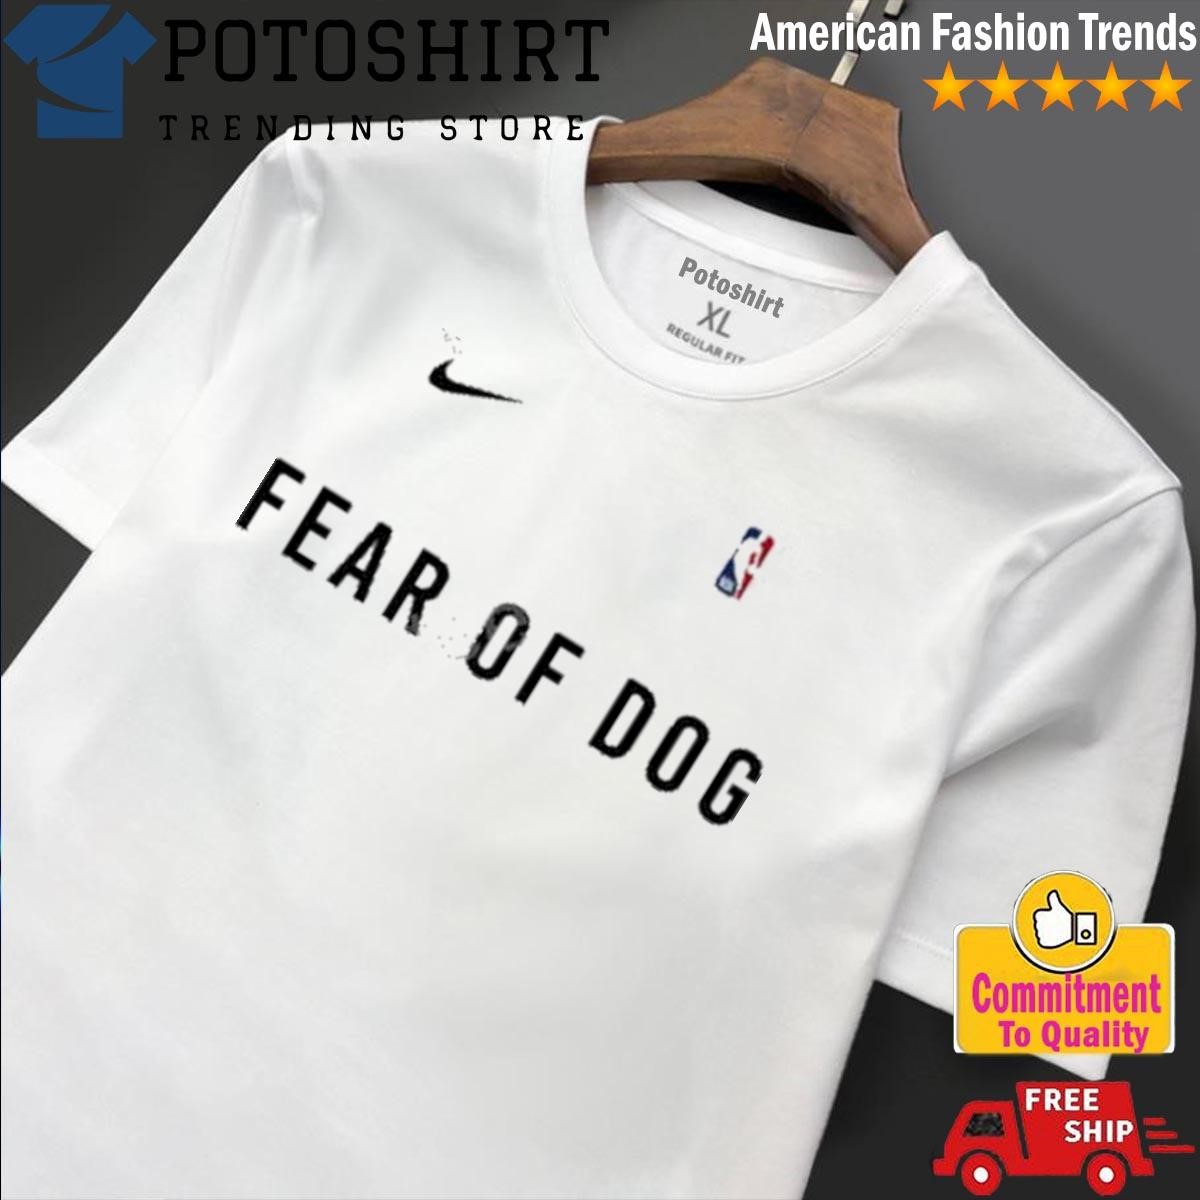 Nike NBA Fear of dog shirt, hoodie, sweater, long sleeve and tank top